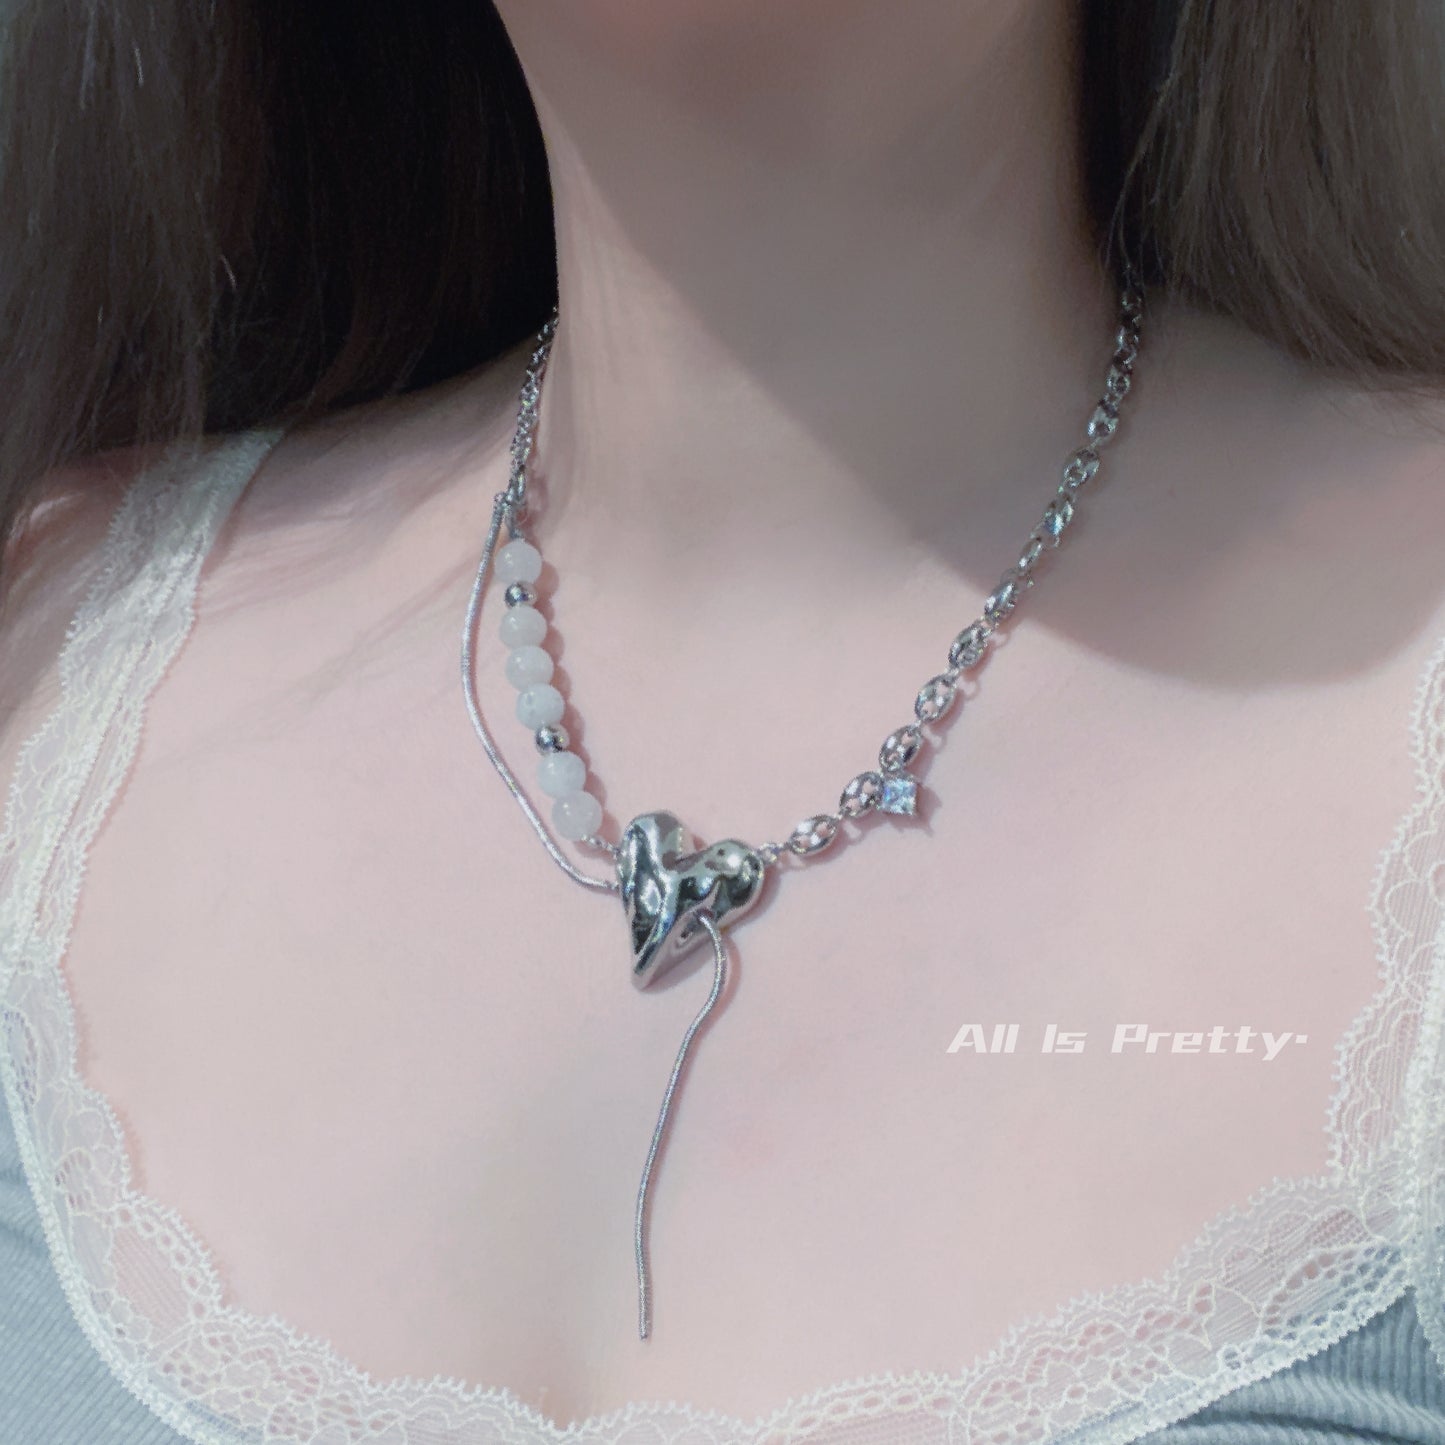 Stylish layered chain necklace